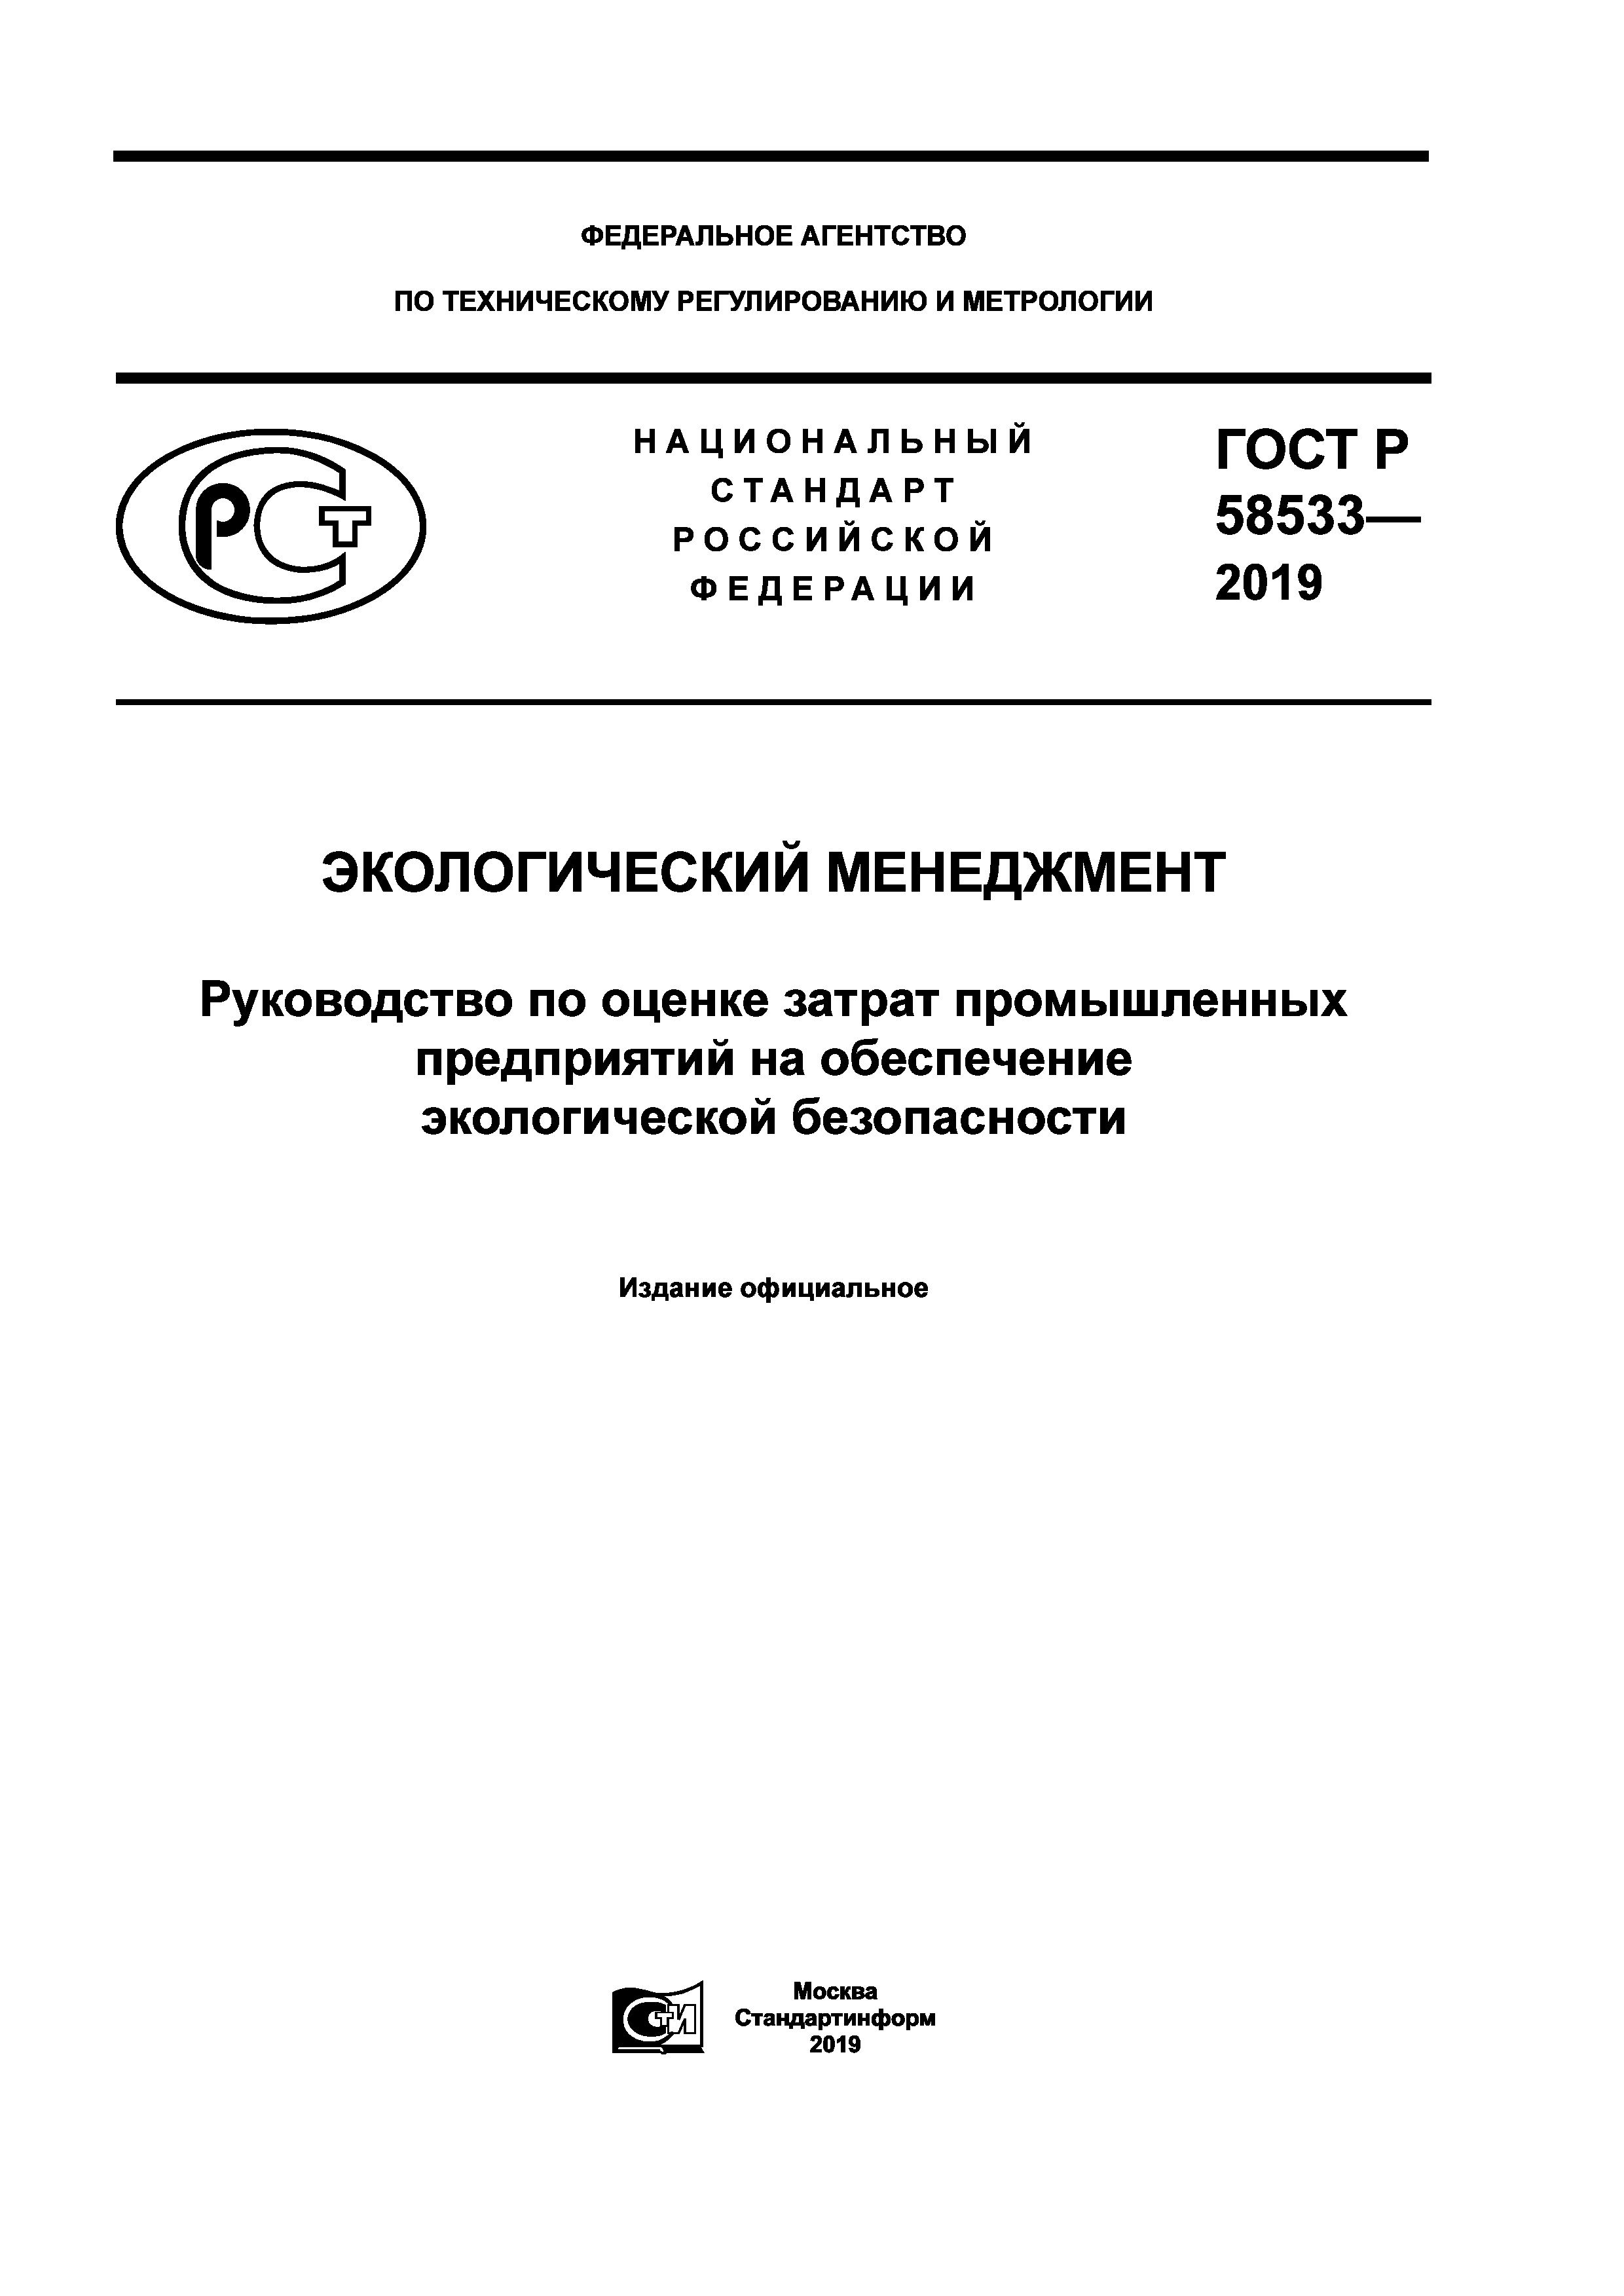 ГОСТ Р 58533-2019